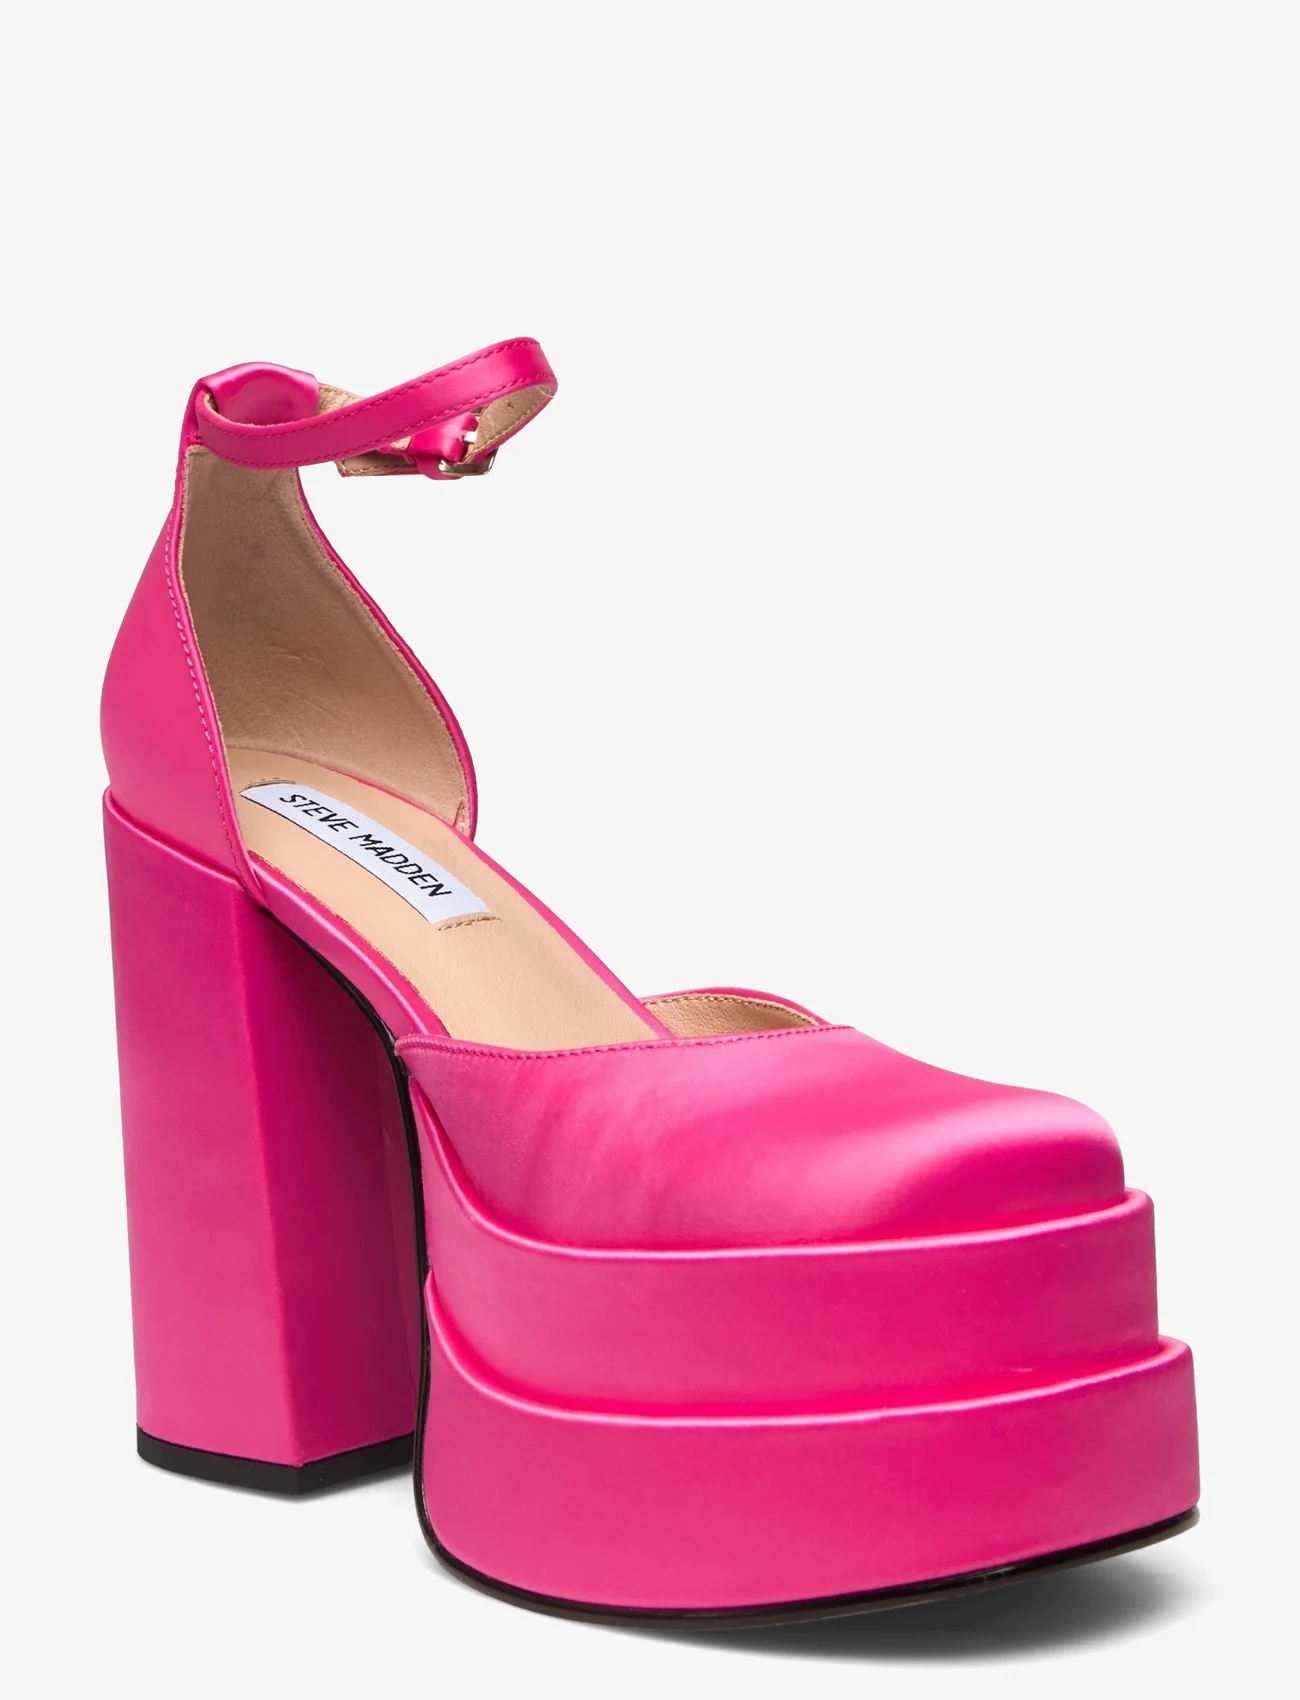 Steve Madden - Charlize Sandal - festklær til outlet-priser - pink satin - 0